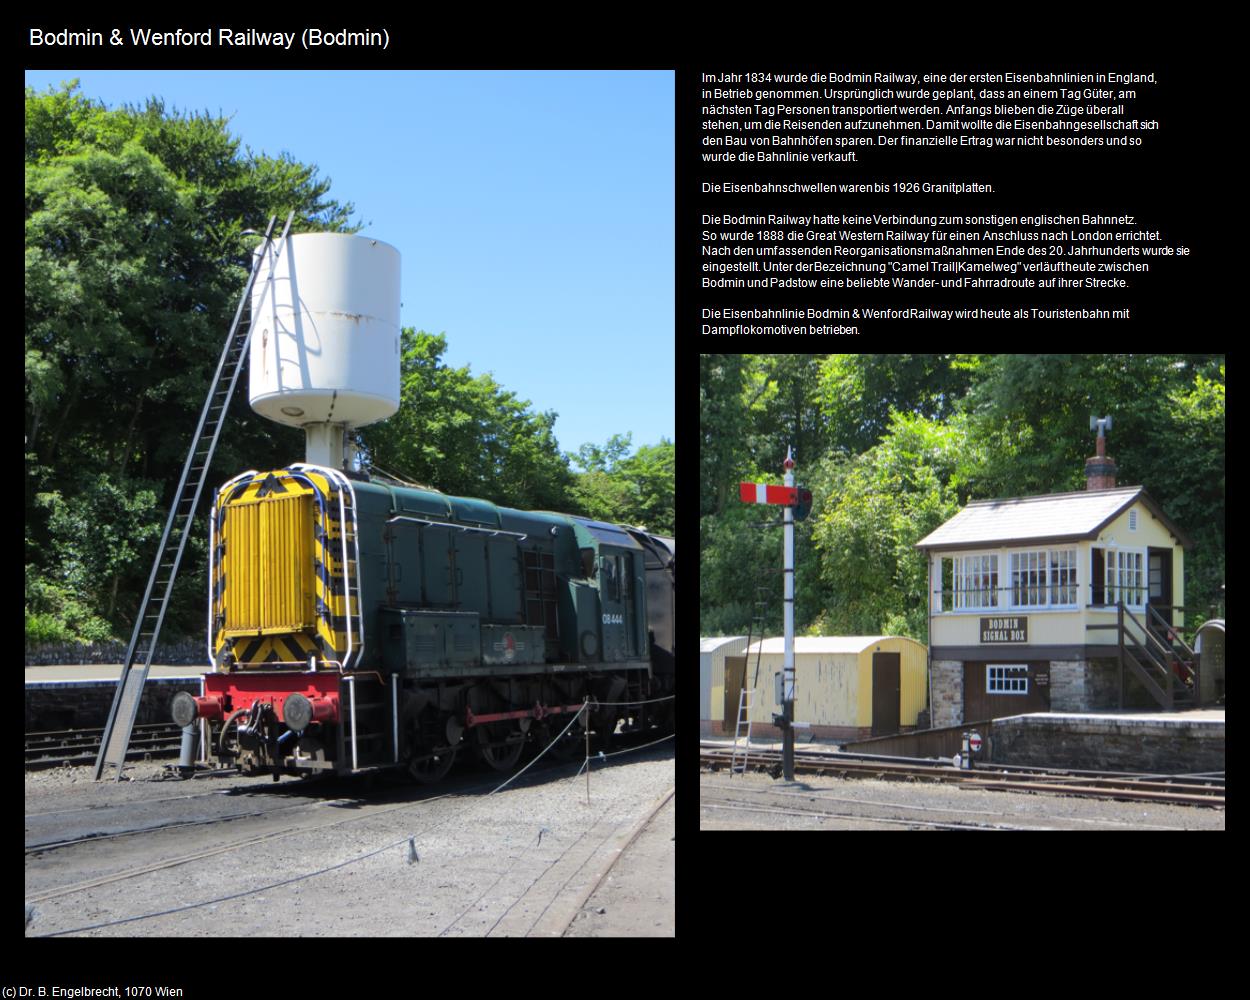 Bodmin & Wenford Railway (Bodmin, England) in Kulturatlas-ENGLAND und WALES